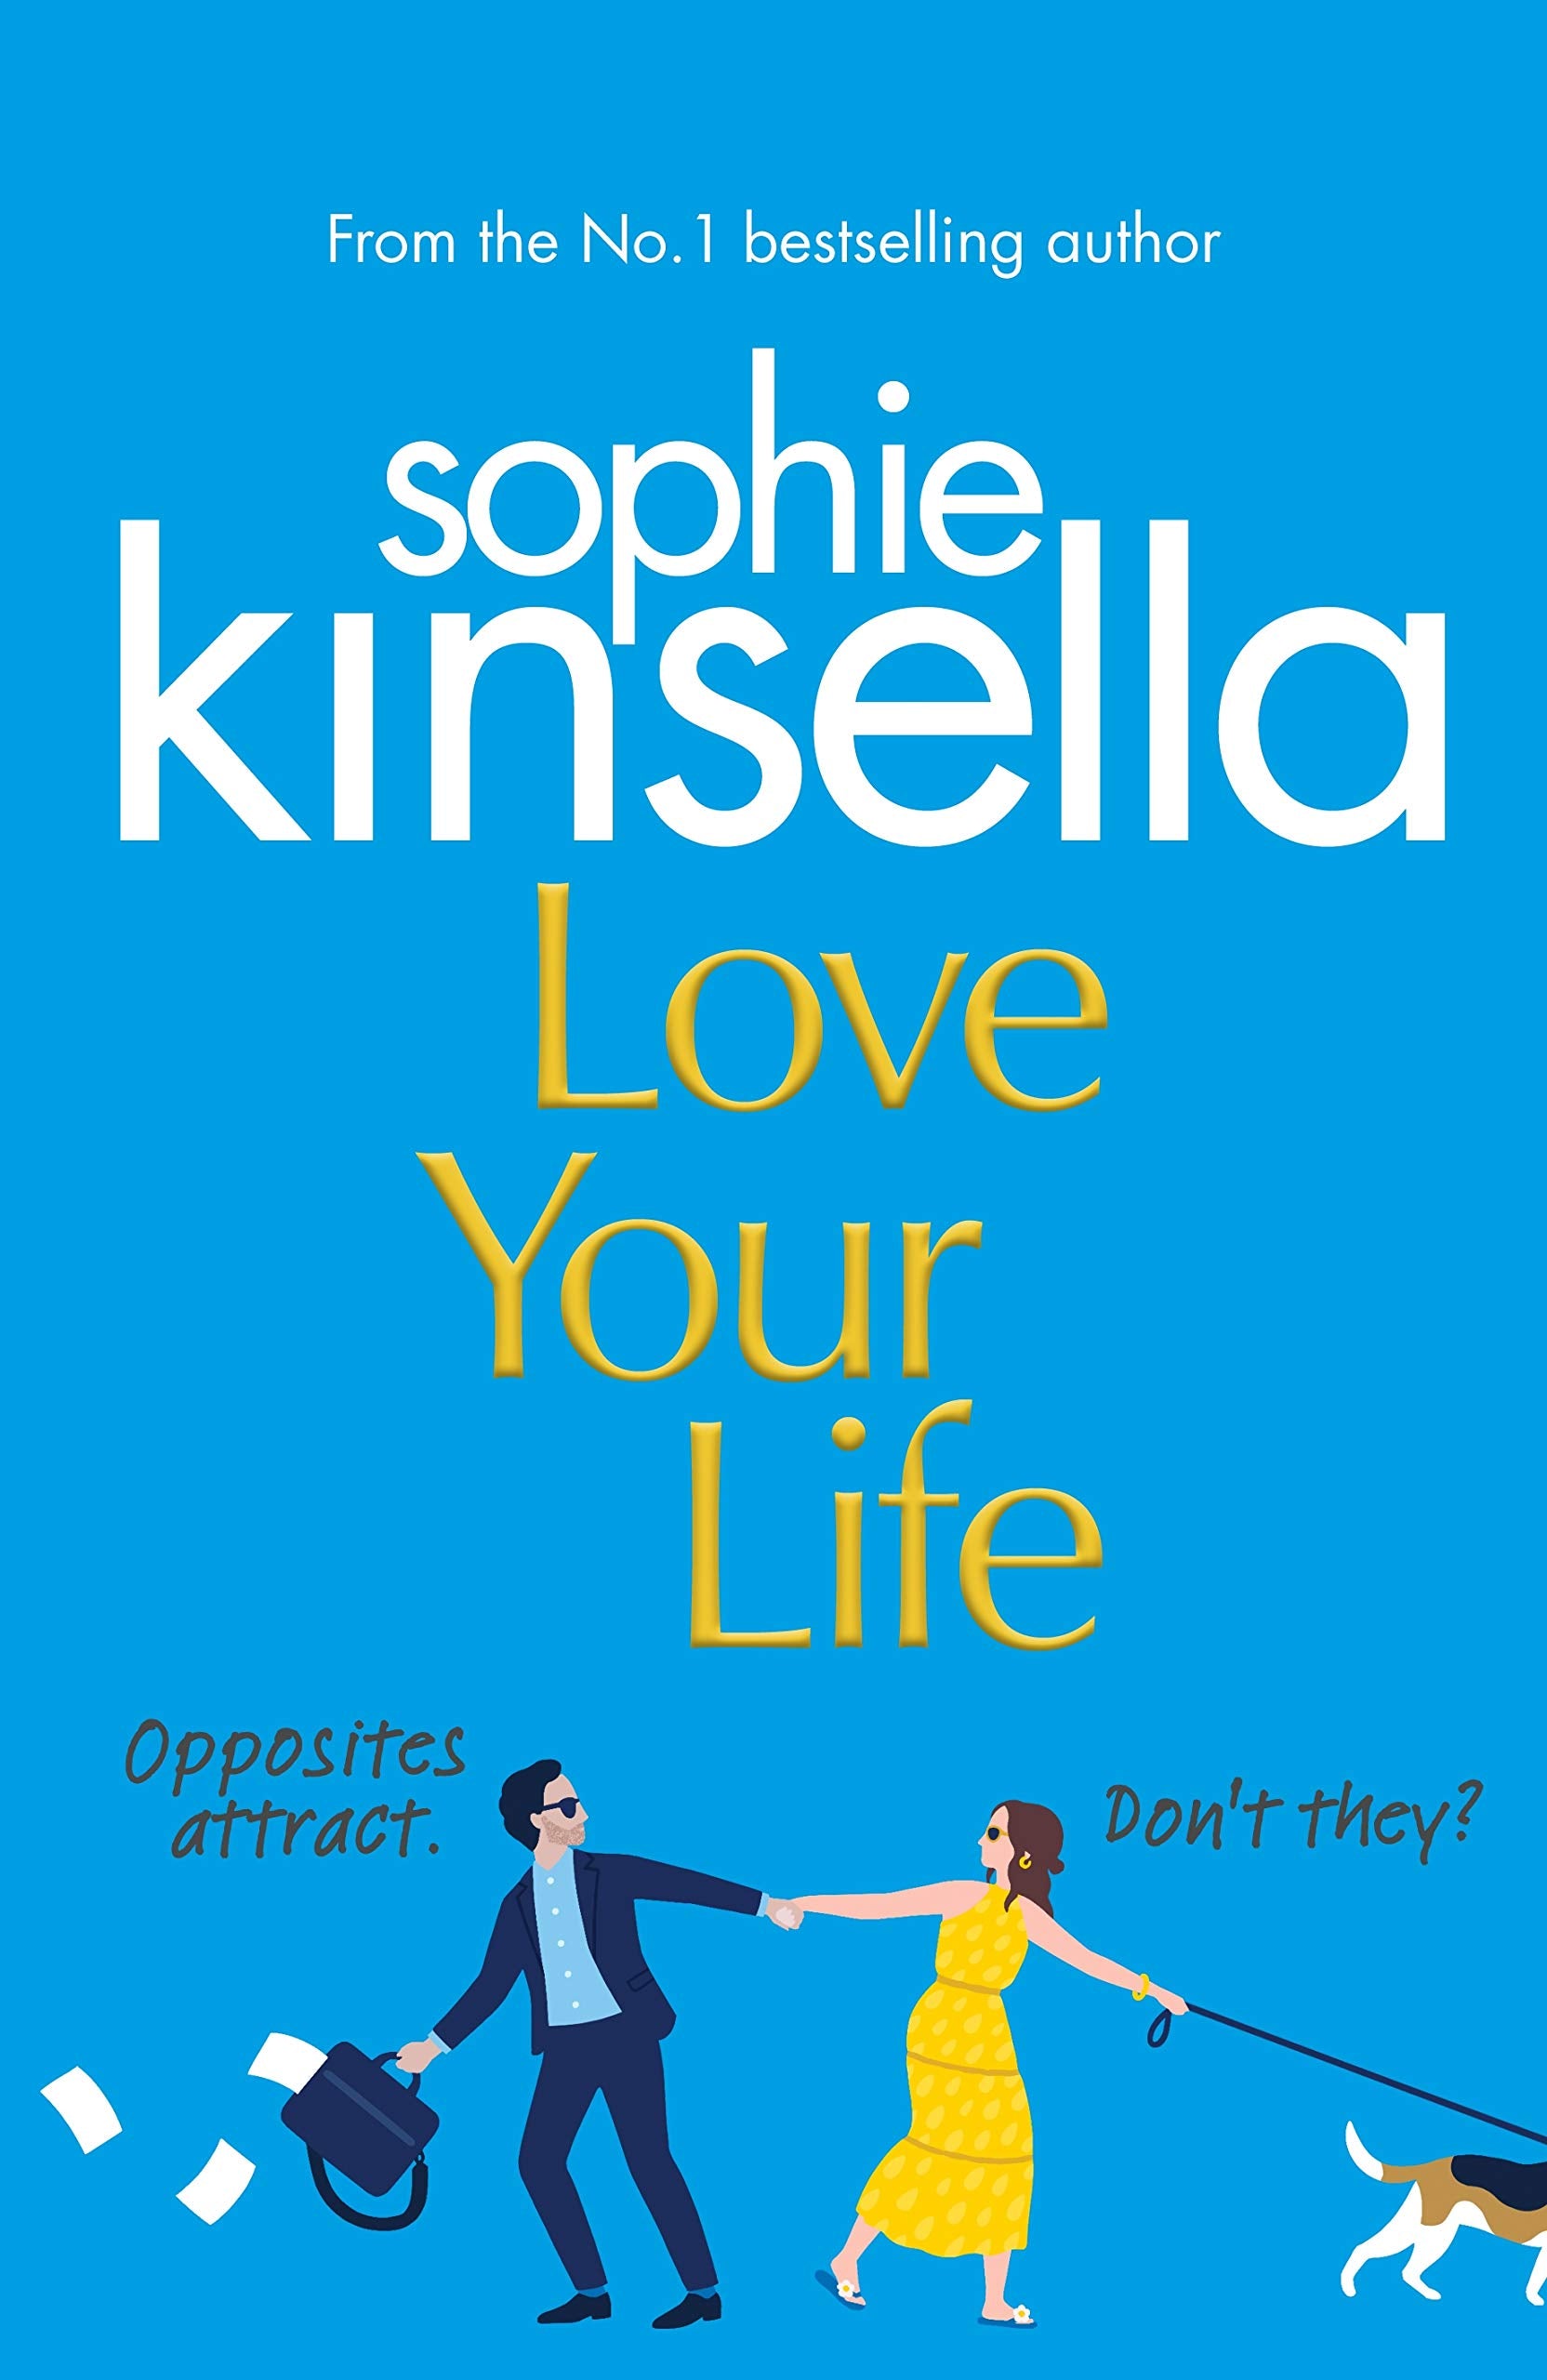 Hong Kong book shop Love Your Life (Publication date: October 29, 2020)